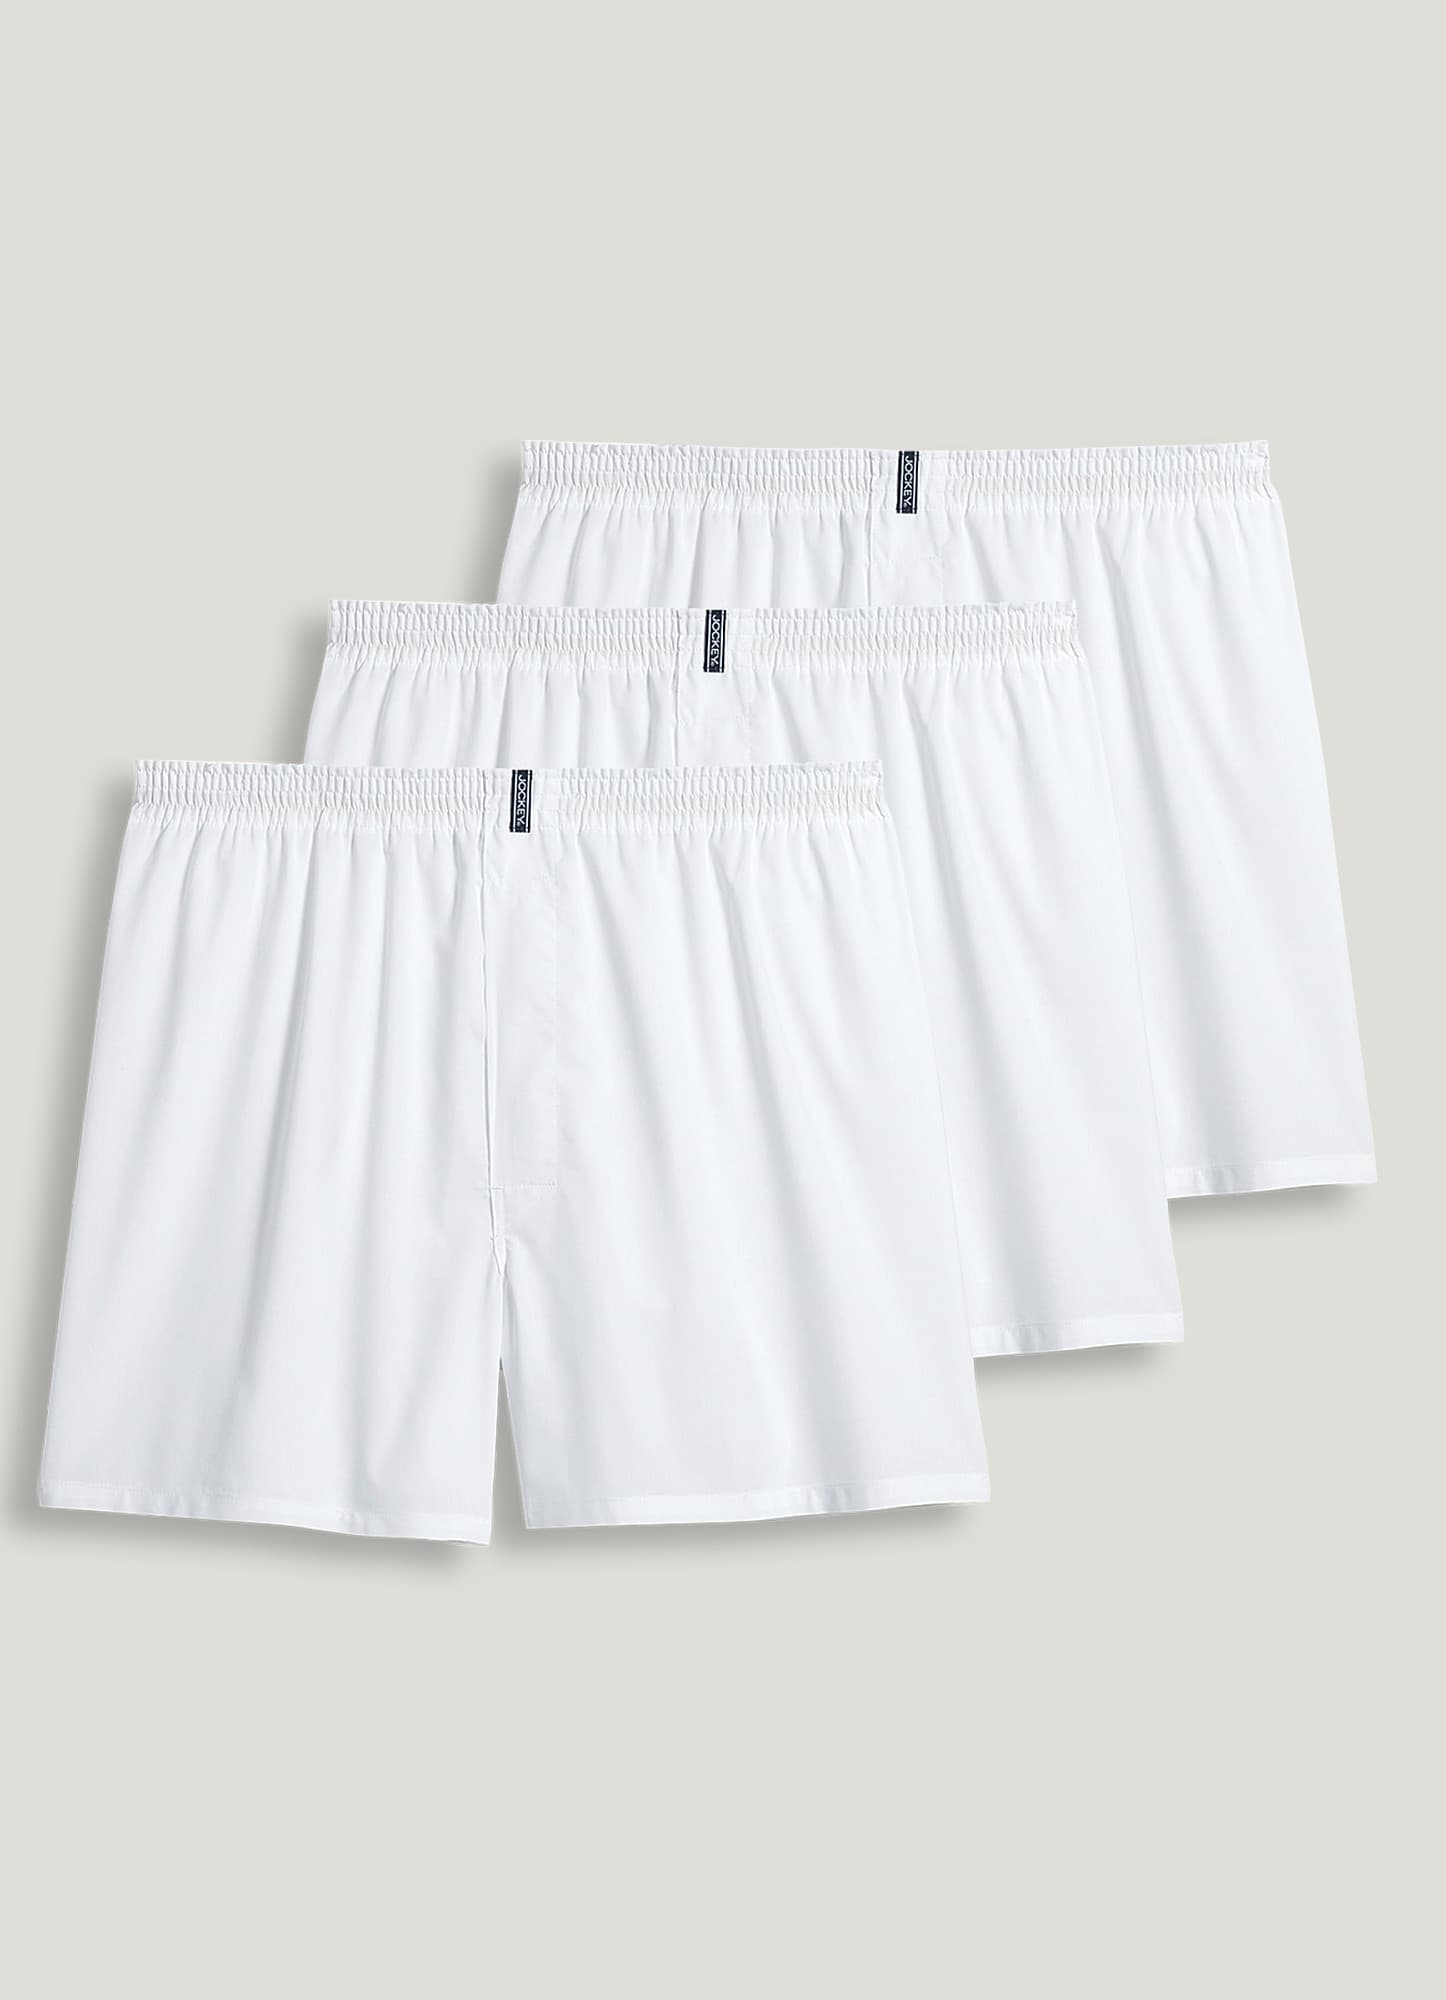 Jockey Men's White Full Cut Woven Boxers 3pk style #9900 – The